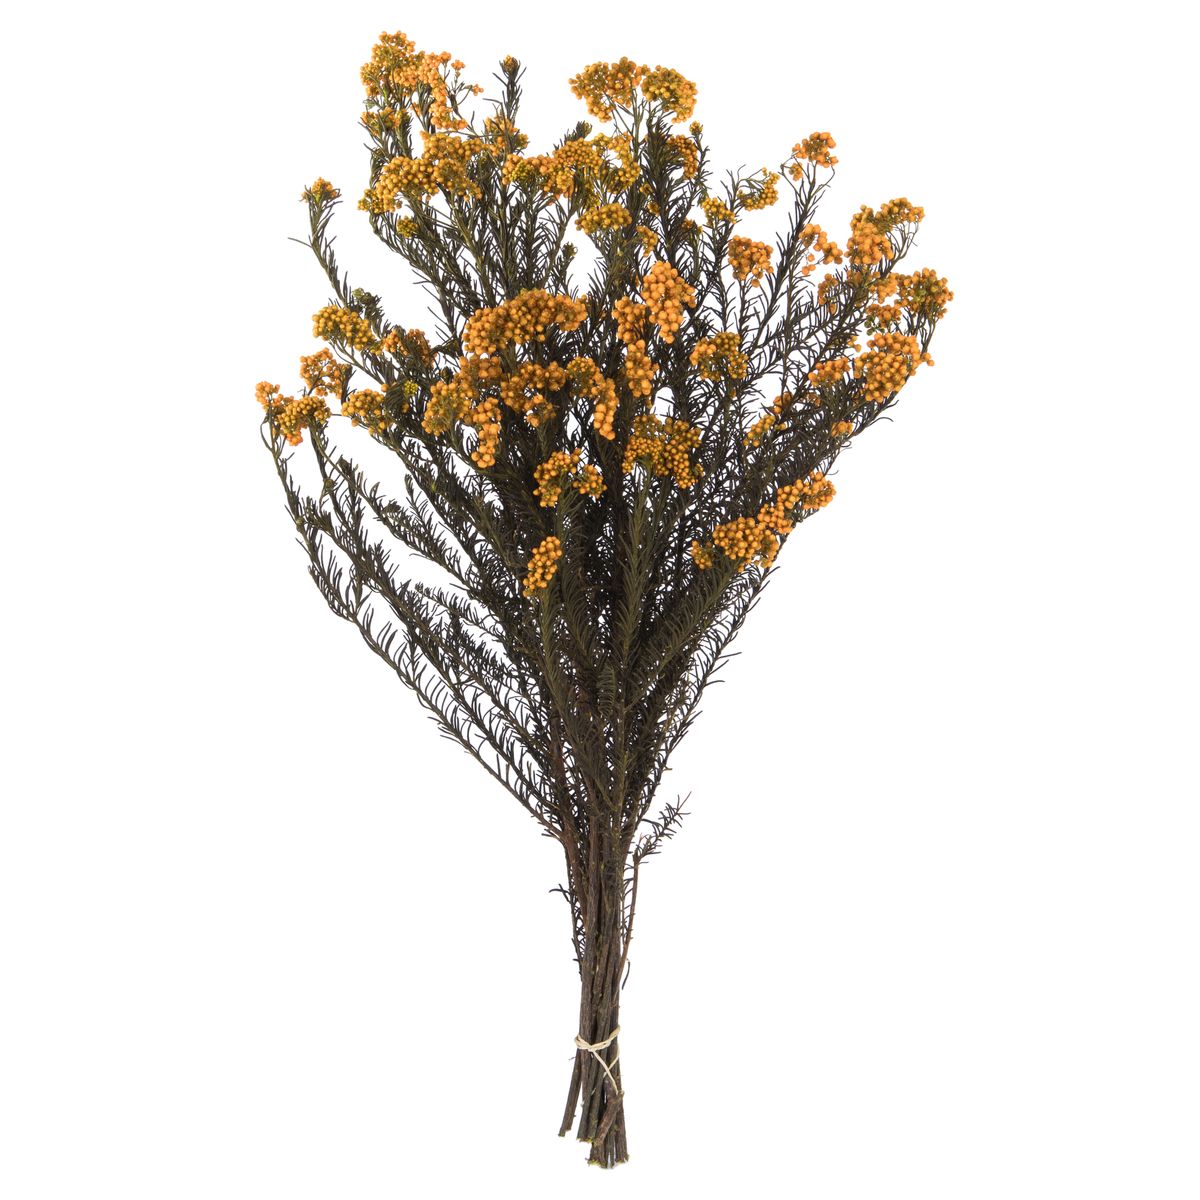 [RDY] [送料無料] Vickerman 16インチ オータムライスフラワー4.25ozの束入り プリザーブド [楽天海外通販] | Vickerman 16" Autumn Rice Flower. Comes in a 4.25 oz Bundle. Preserved